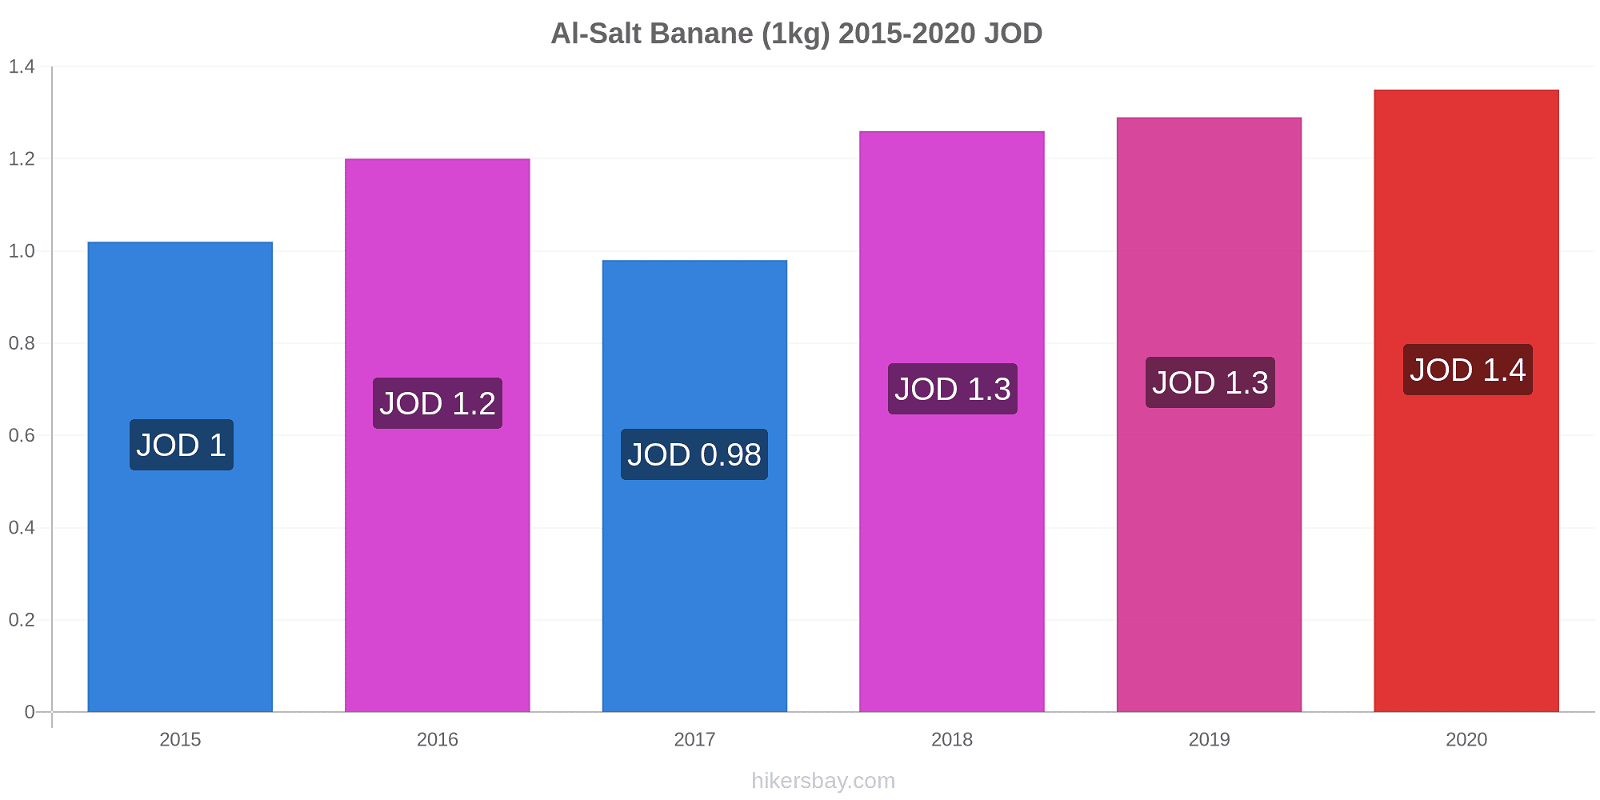 Al-Salt variazioni di prezzo Banana (1kg) hikersbay.com